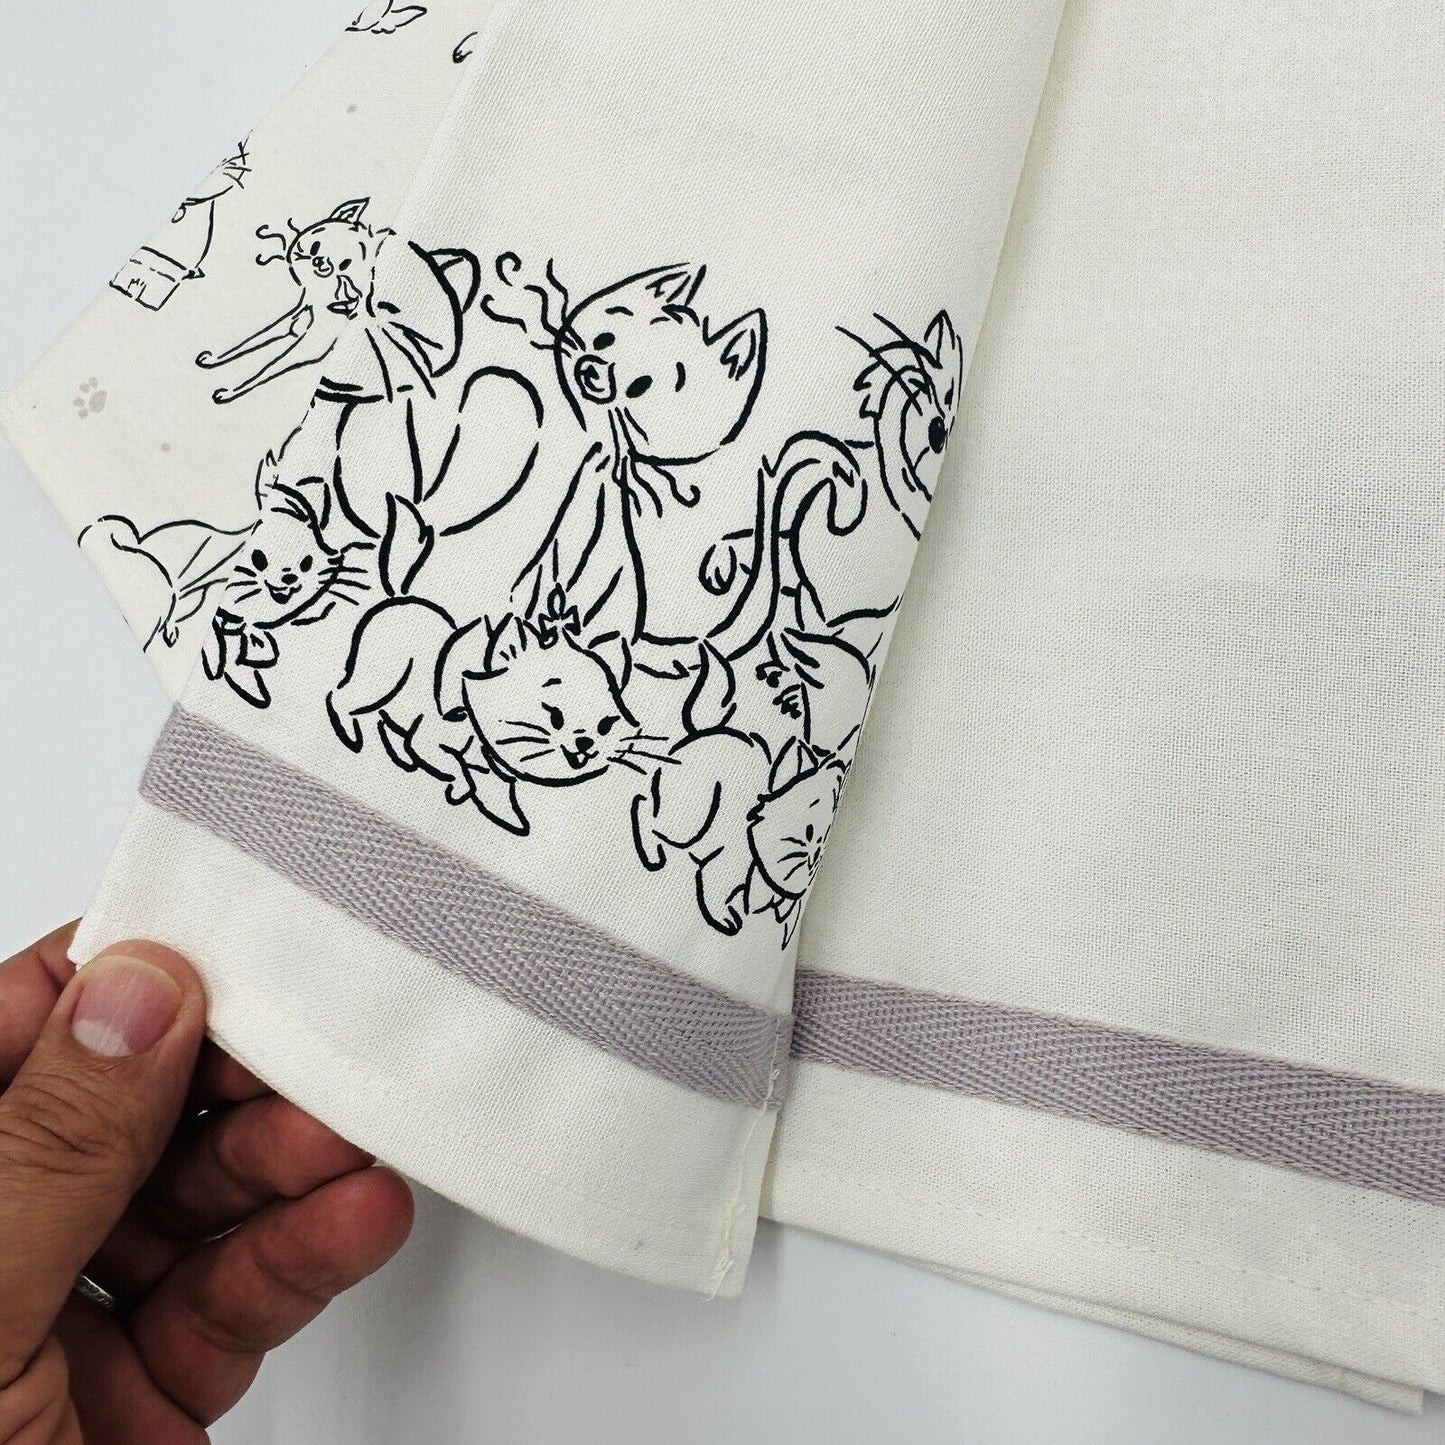 Disney Kitchen Towel Classic Cats Set of 2 Cotton Decor Collectible